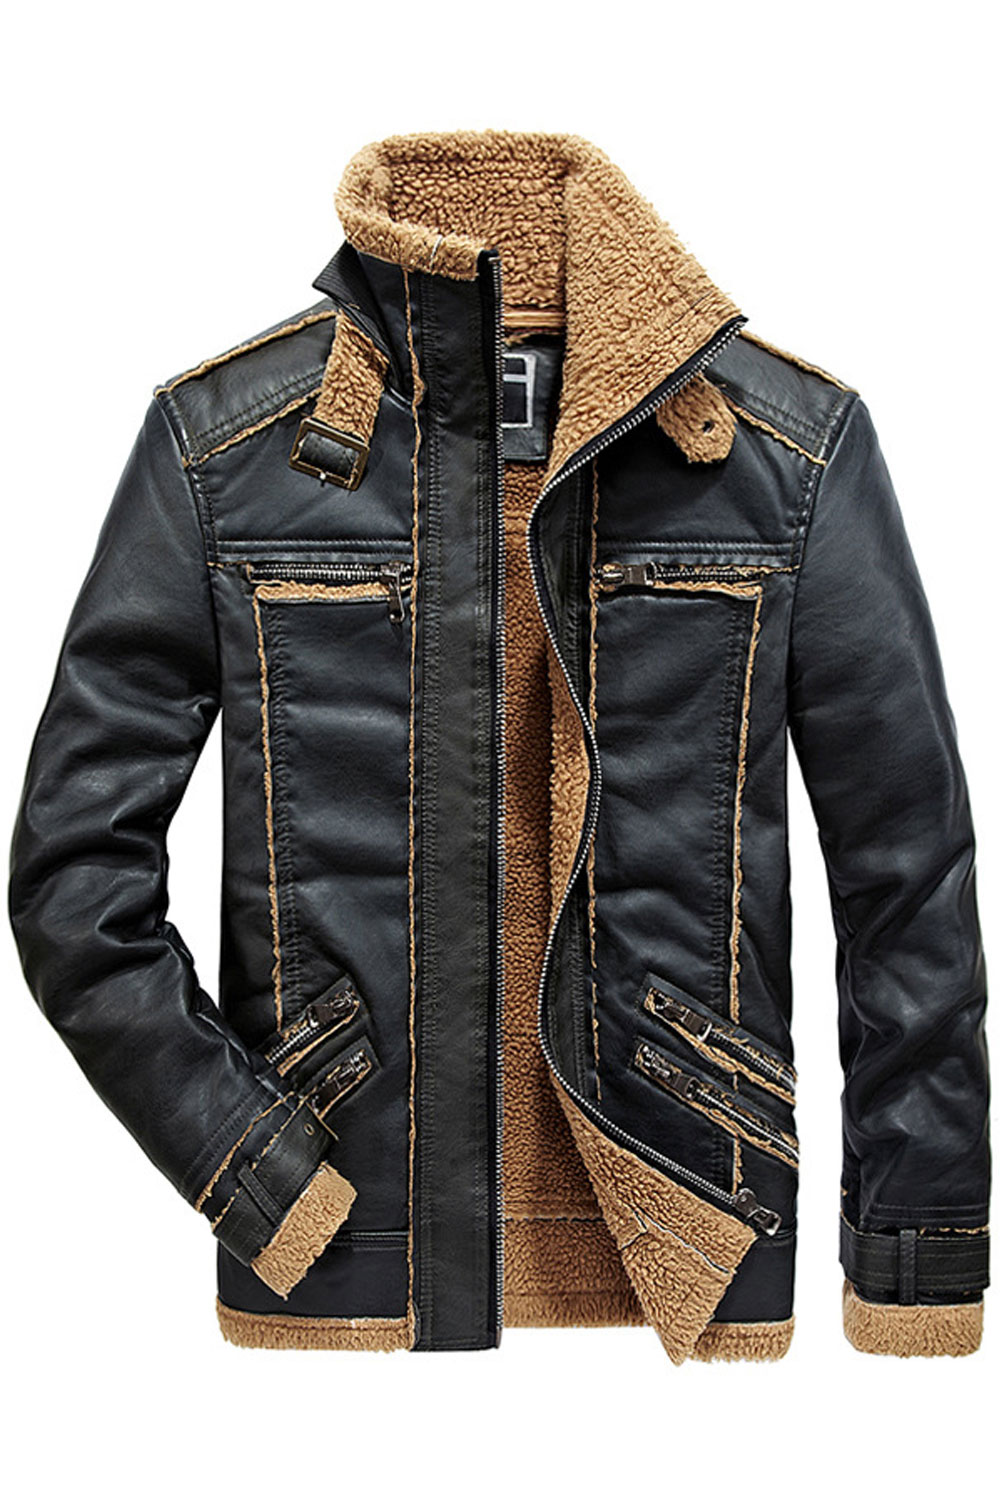 zara men's jackets leather